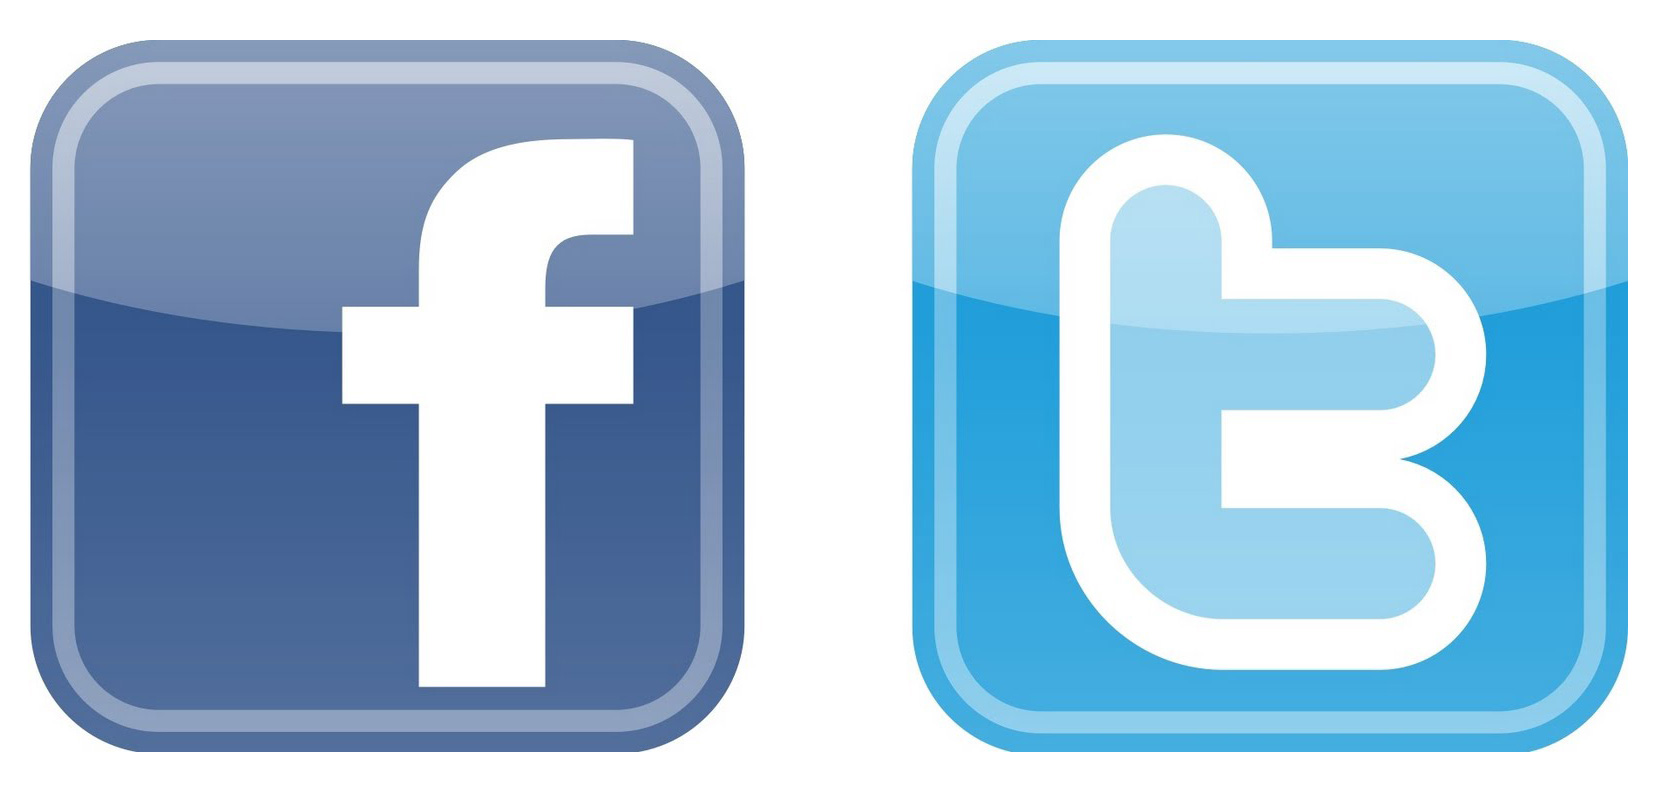 facebook logo | Logospike.com: Famous and Free Vector Logos